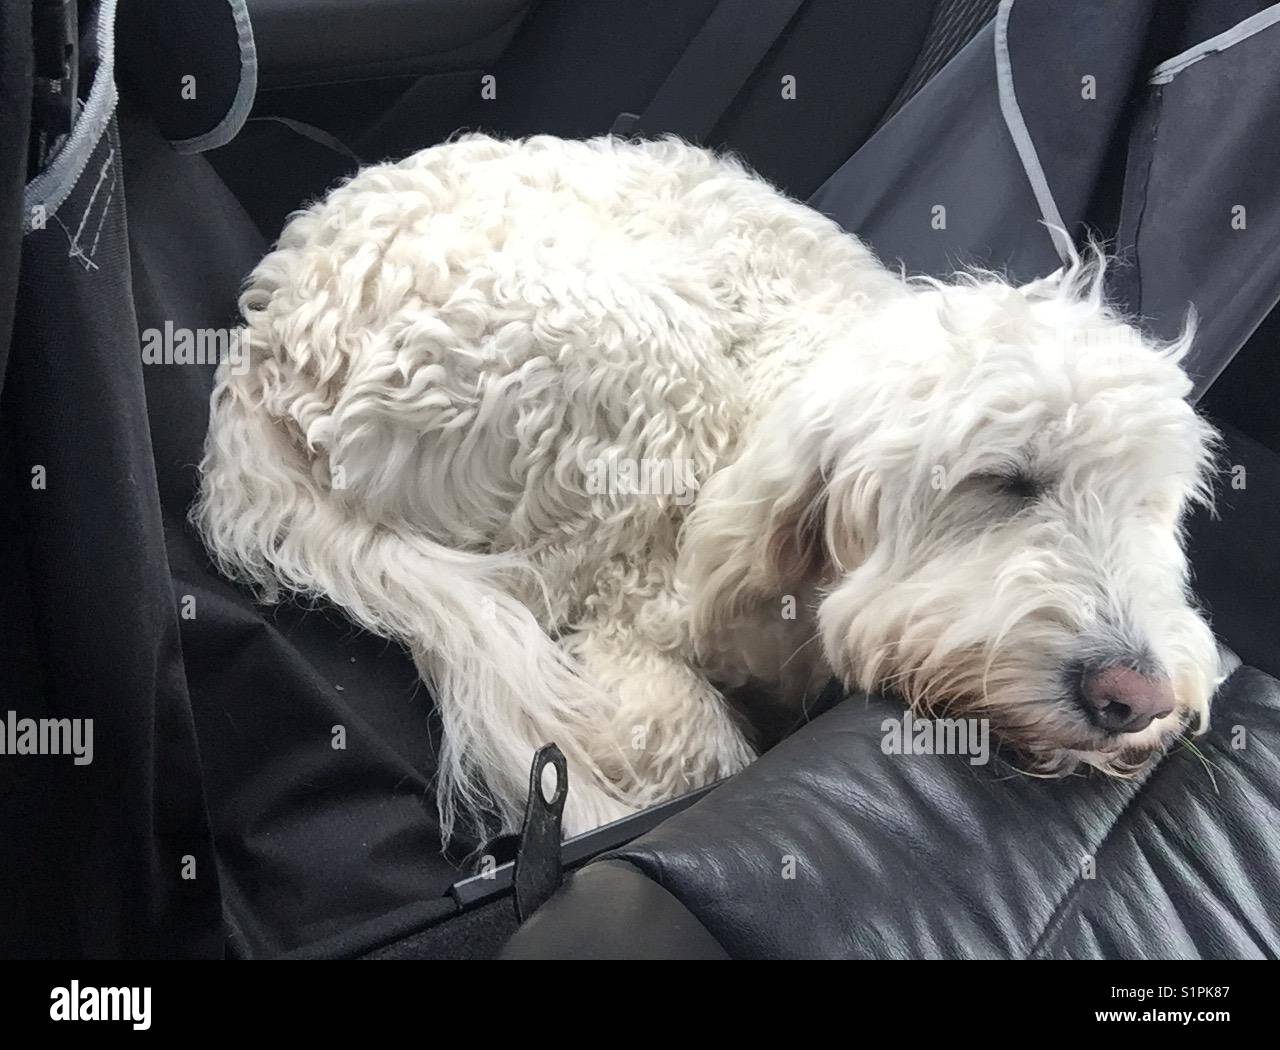 White dog in car backseat sleeping on black blanket Stock Photo